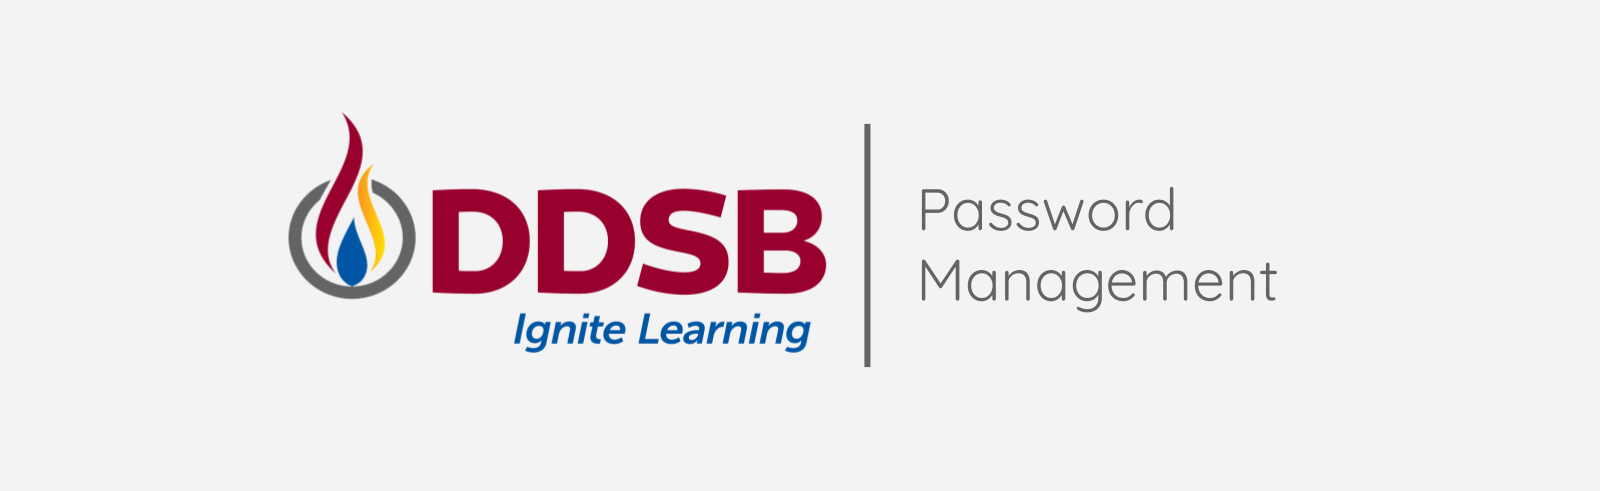 DDSB Password Management